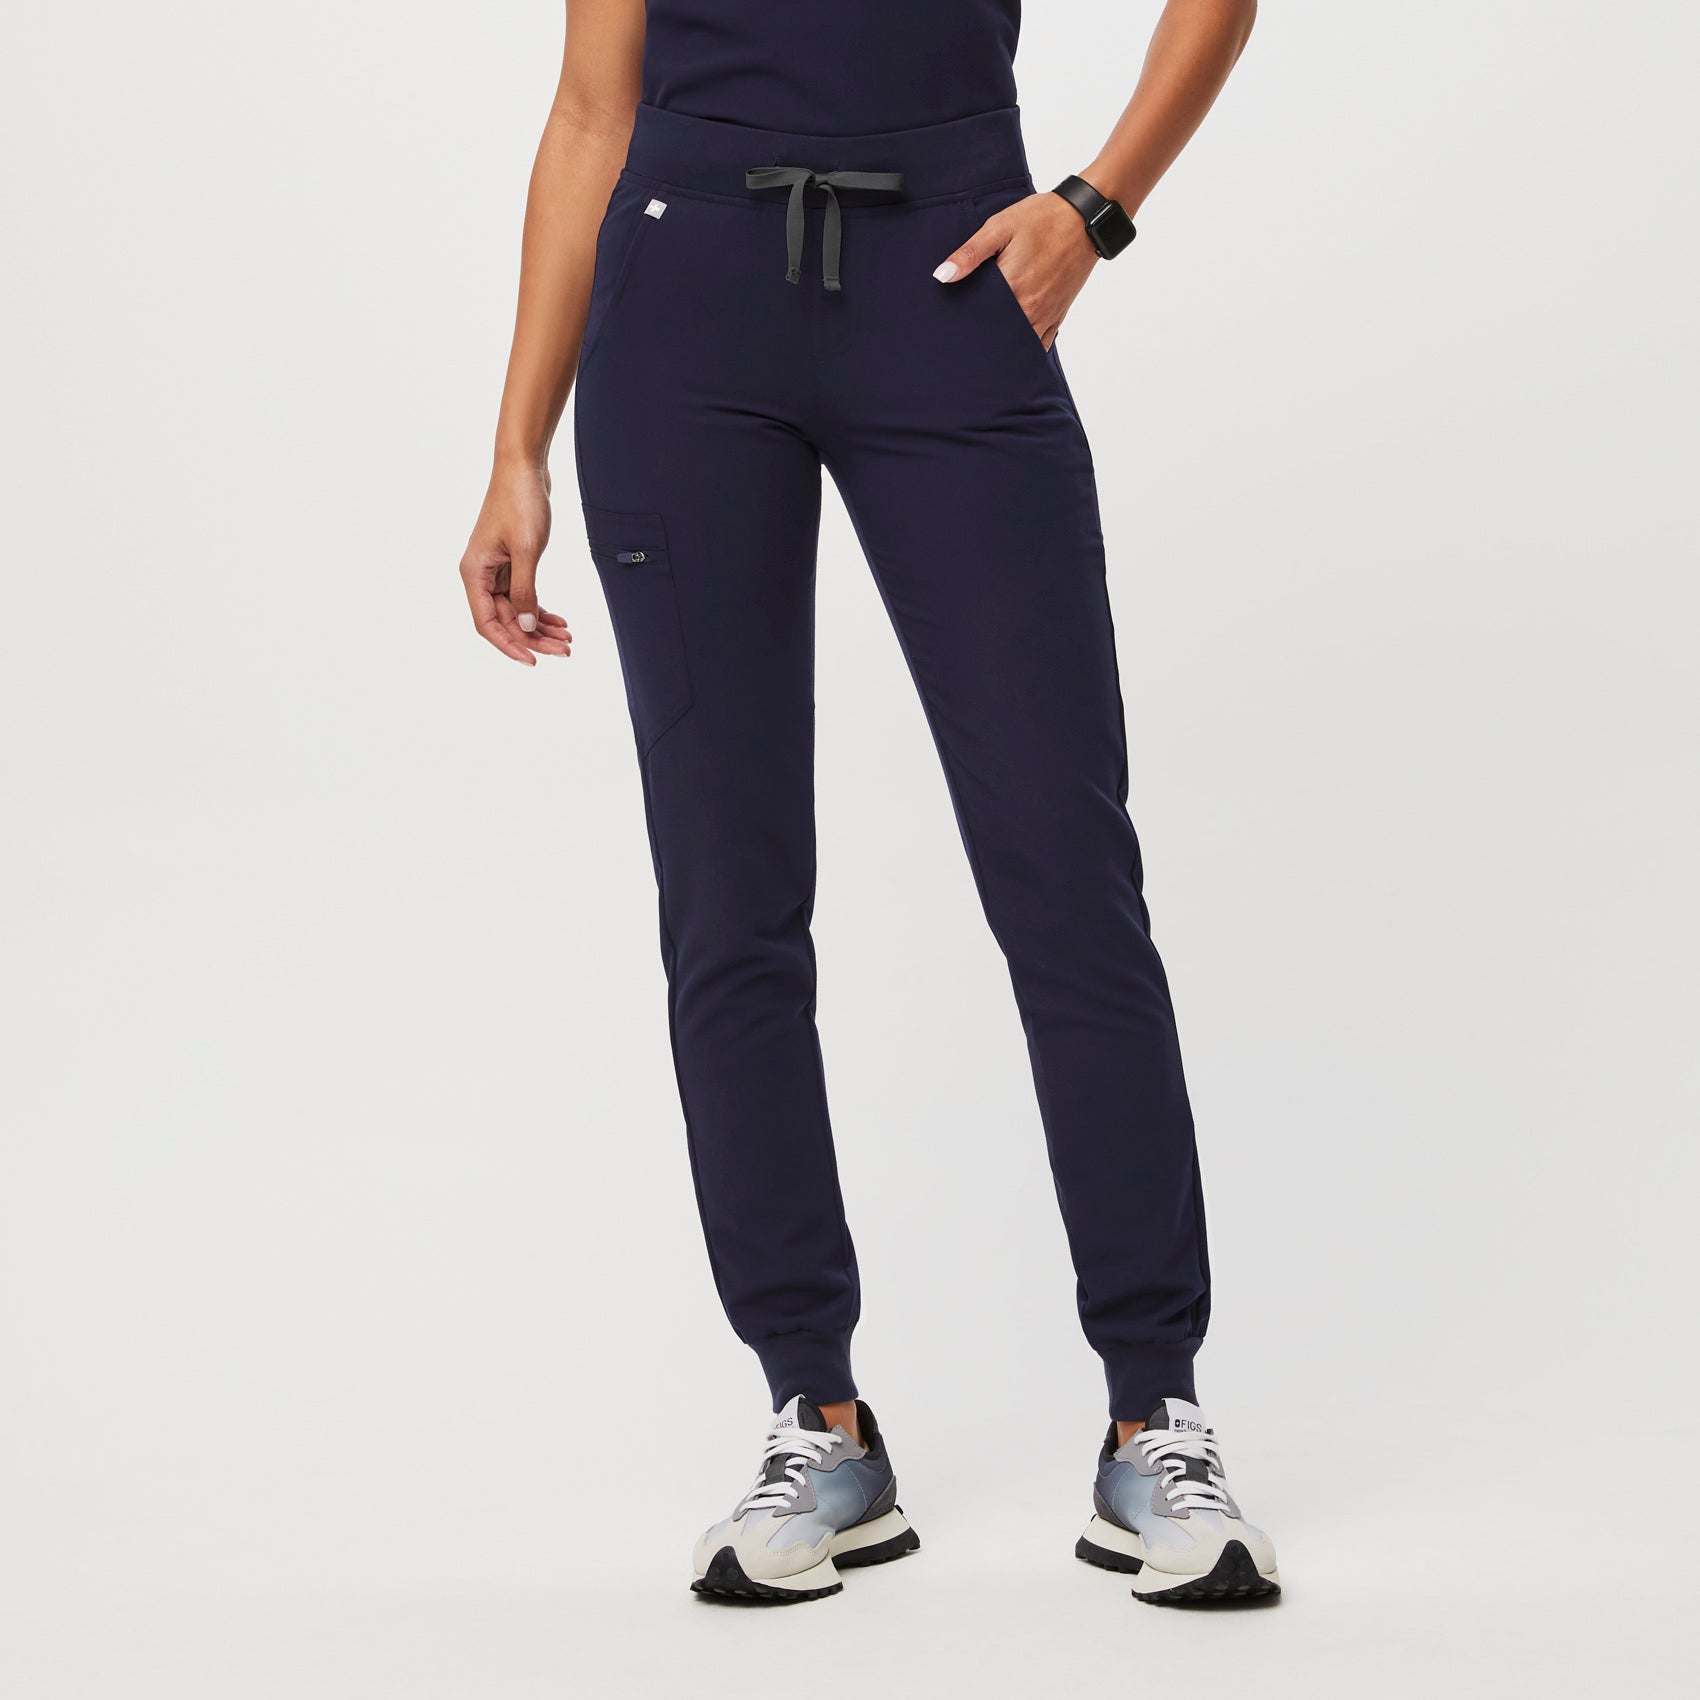 Buy the NWT Womens Blue Elastic Waist Tapered Leg Farallon Jogger Pants  Size Small